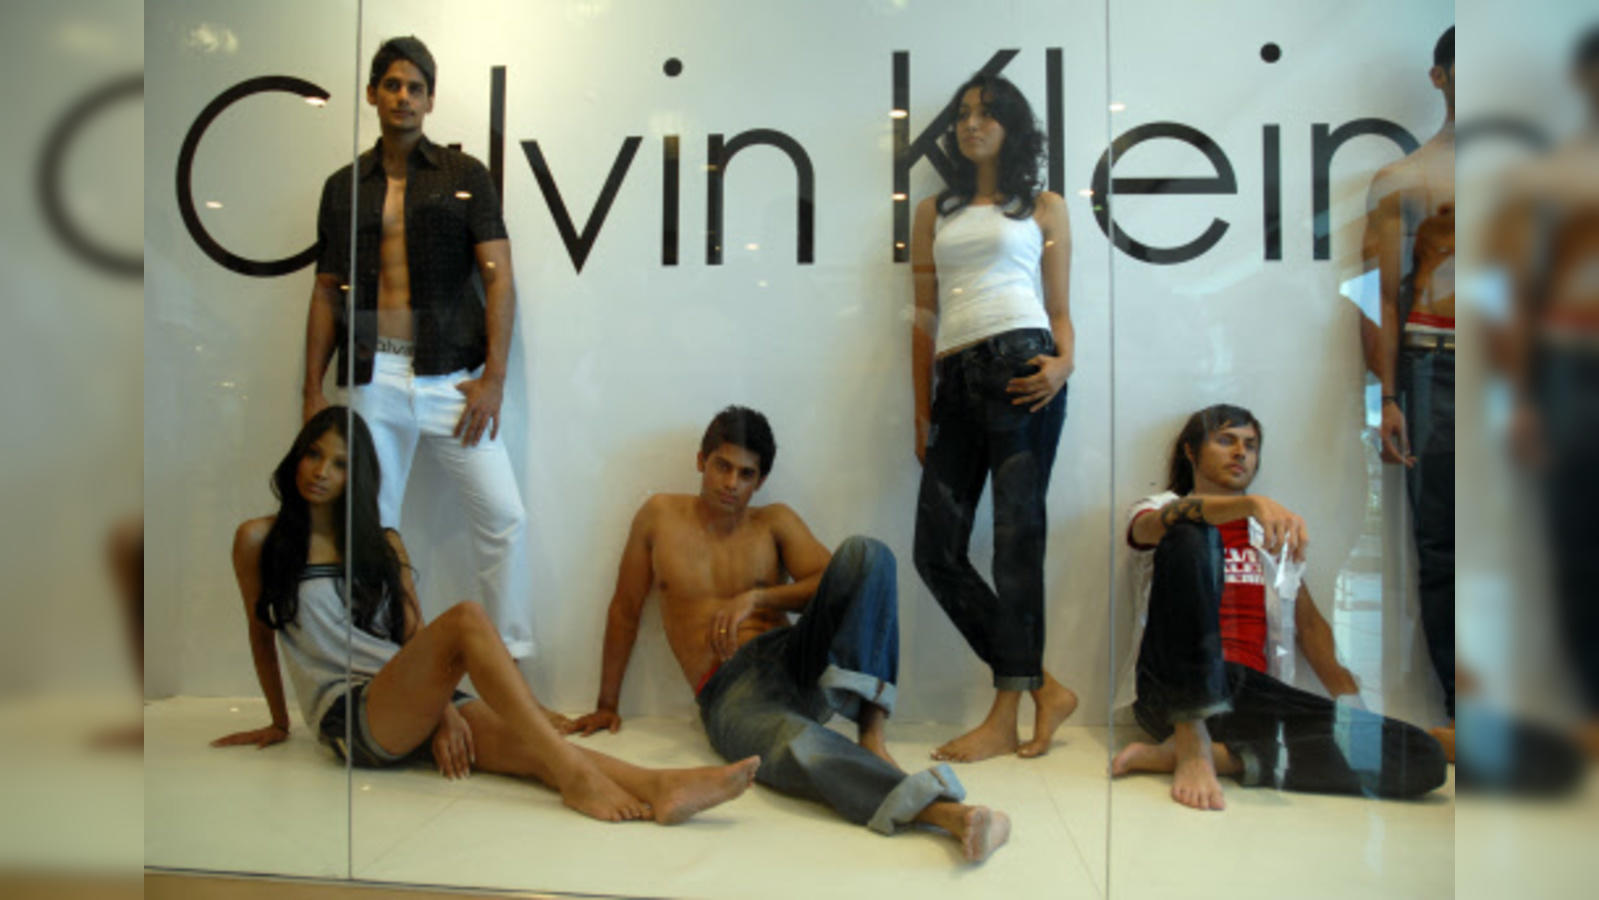 Calvin Klein - Apparel, Underwear, and more in Ontario, CA